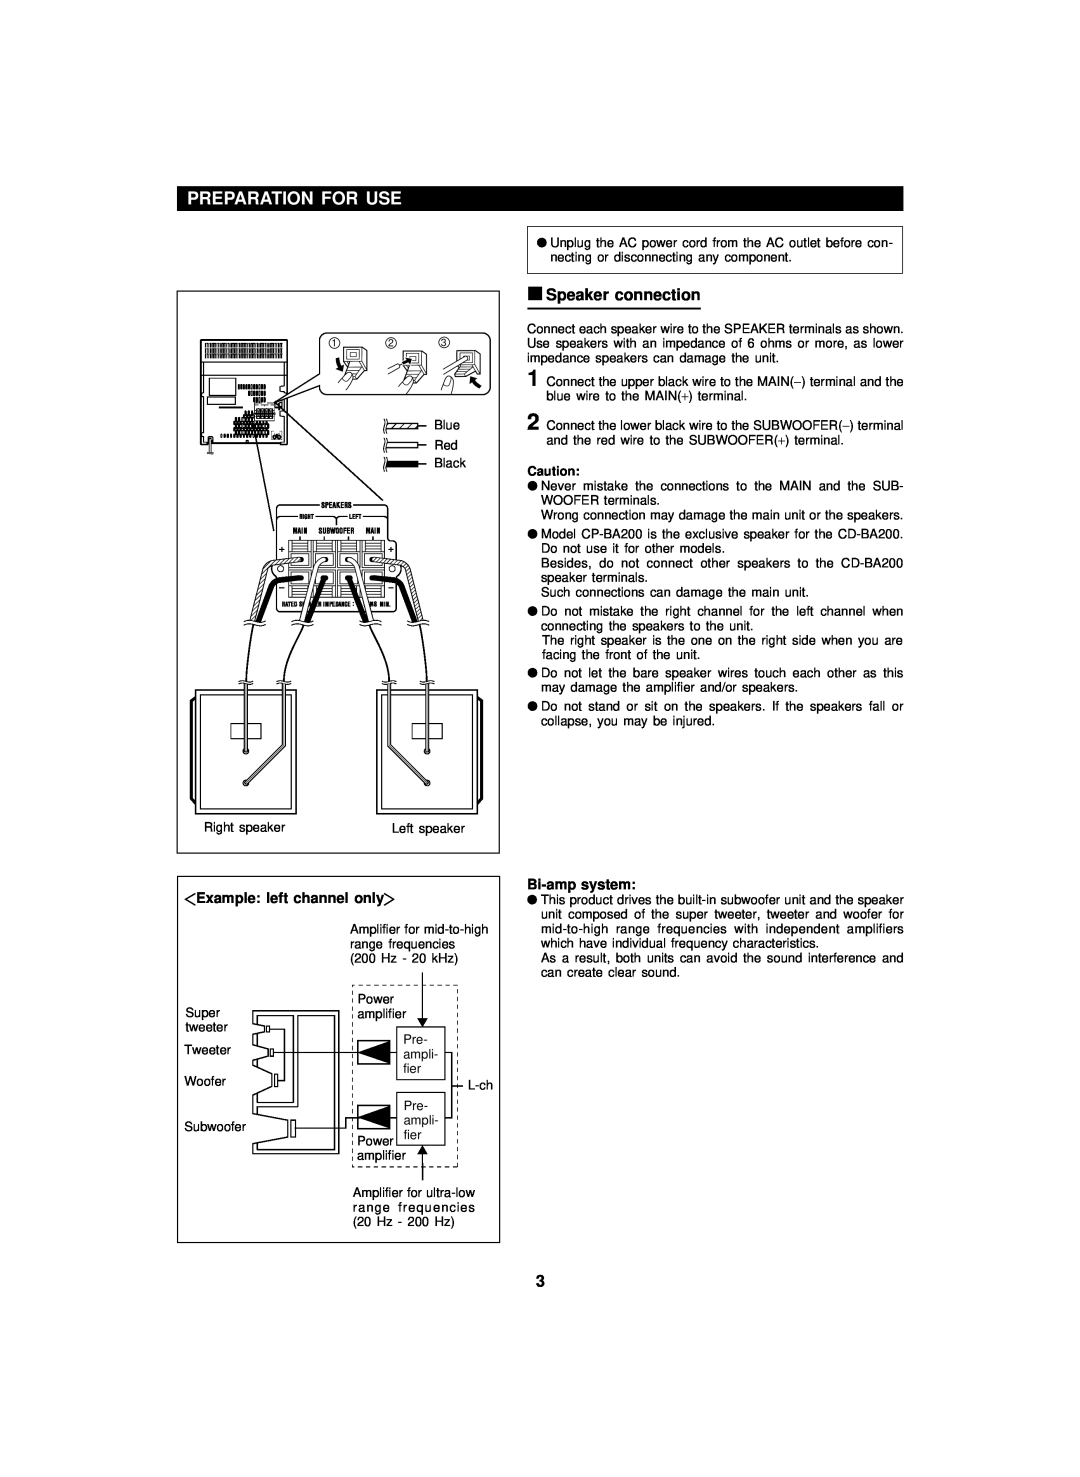 Sharp CD-BA200 operation manual Preparation For Use, Speaker connection, ZExample left channel onlyY, Bi-ampsystem 